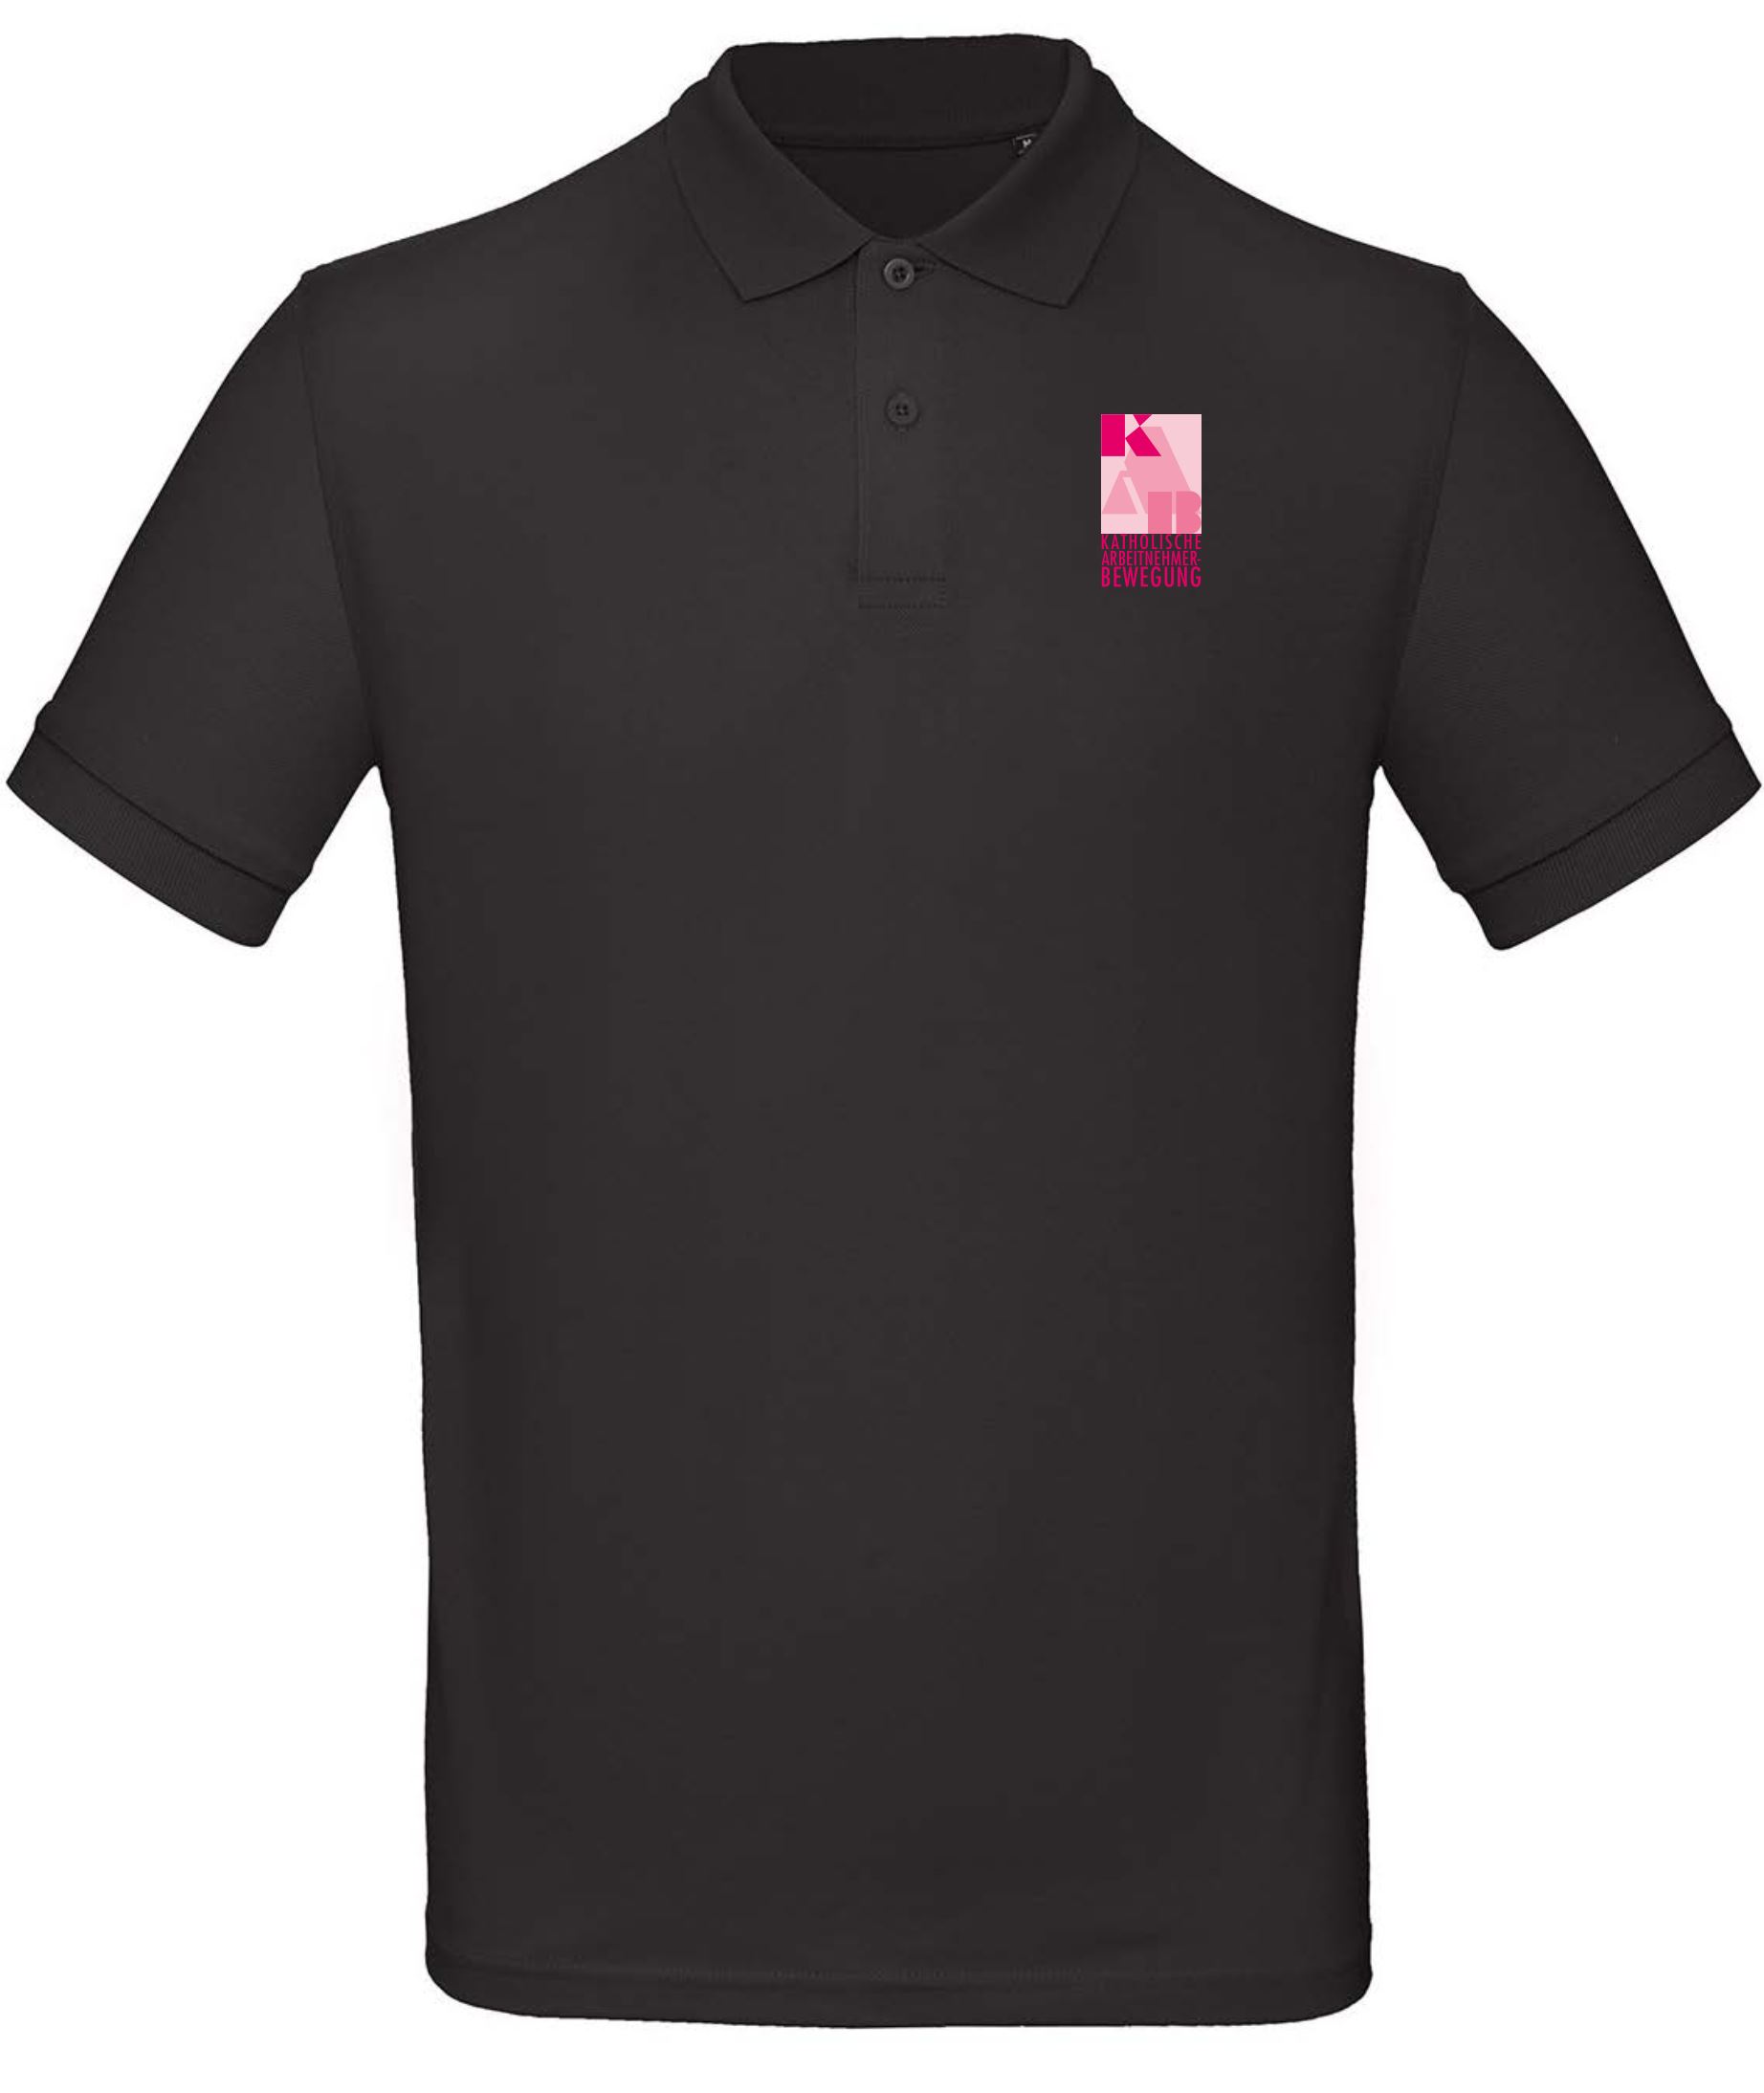 KAB Kampagnen-Kurzarm-Poloshirt schwarz unisex Gr. XL